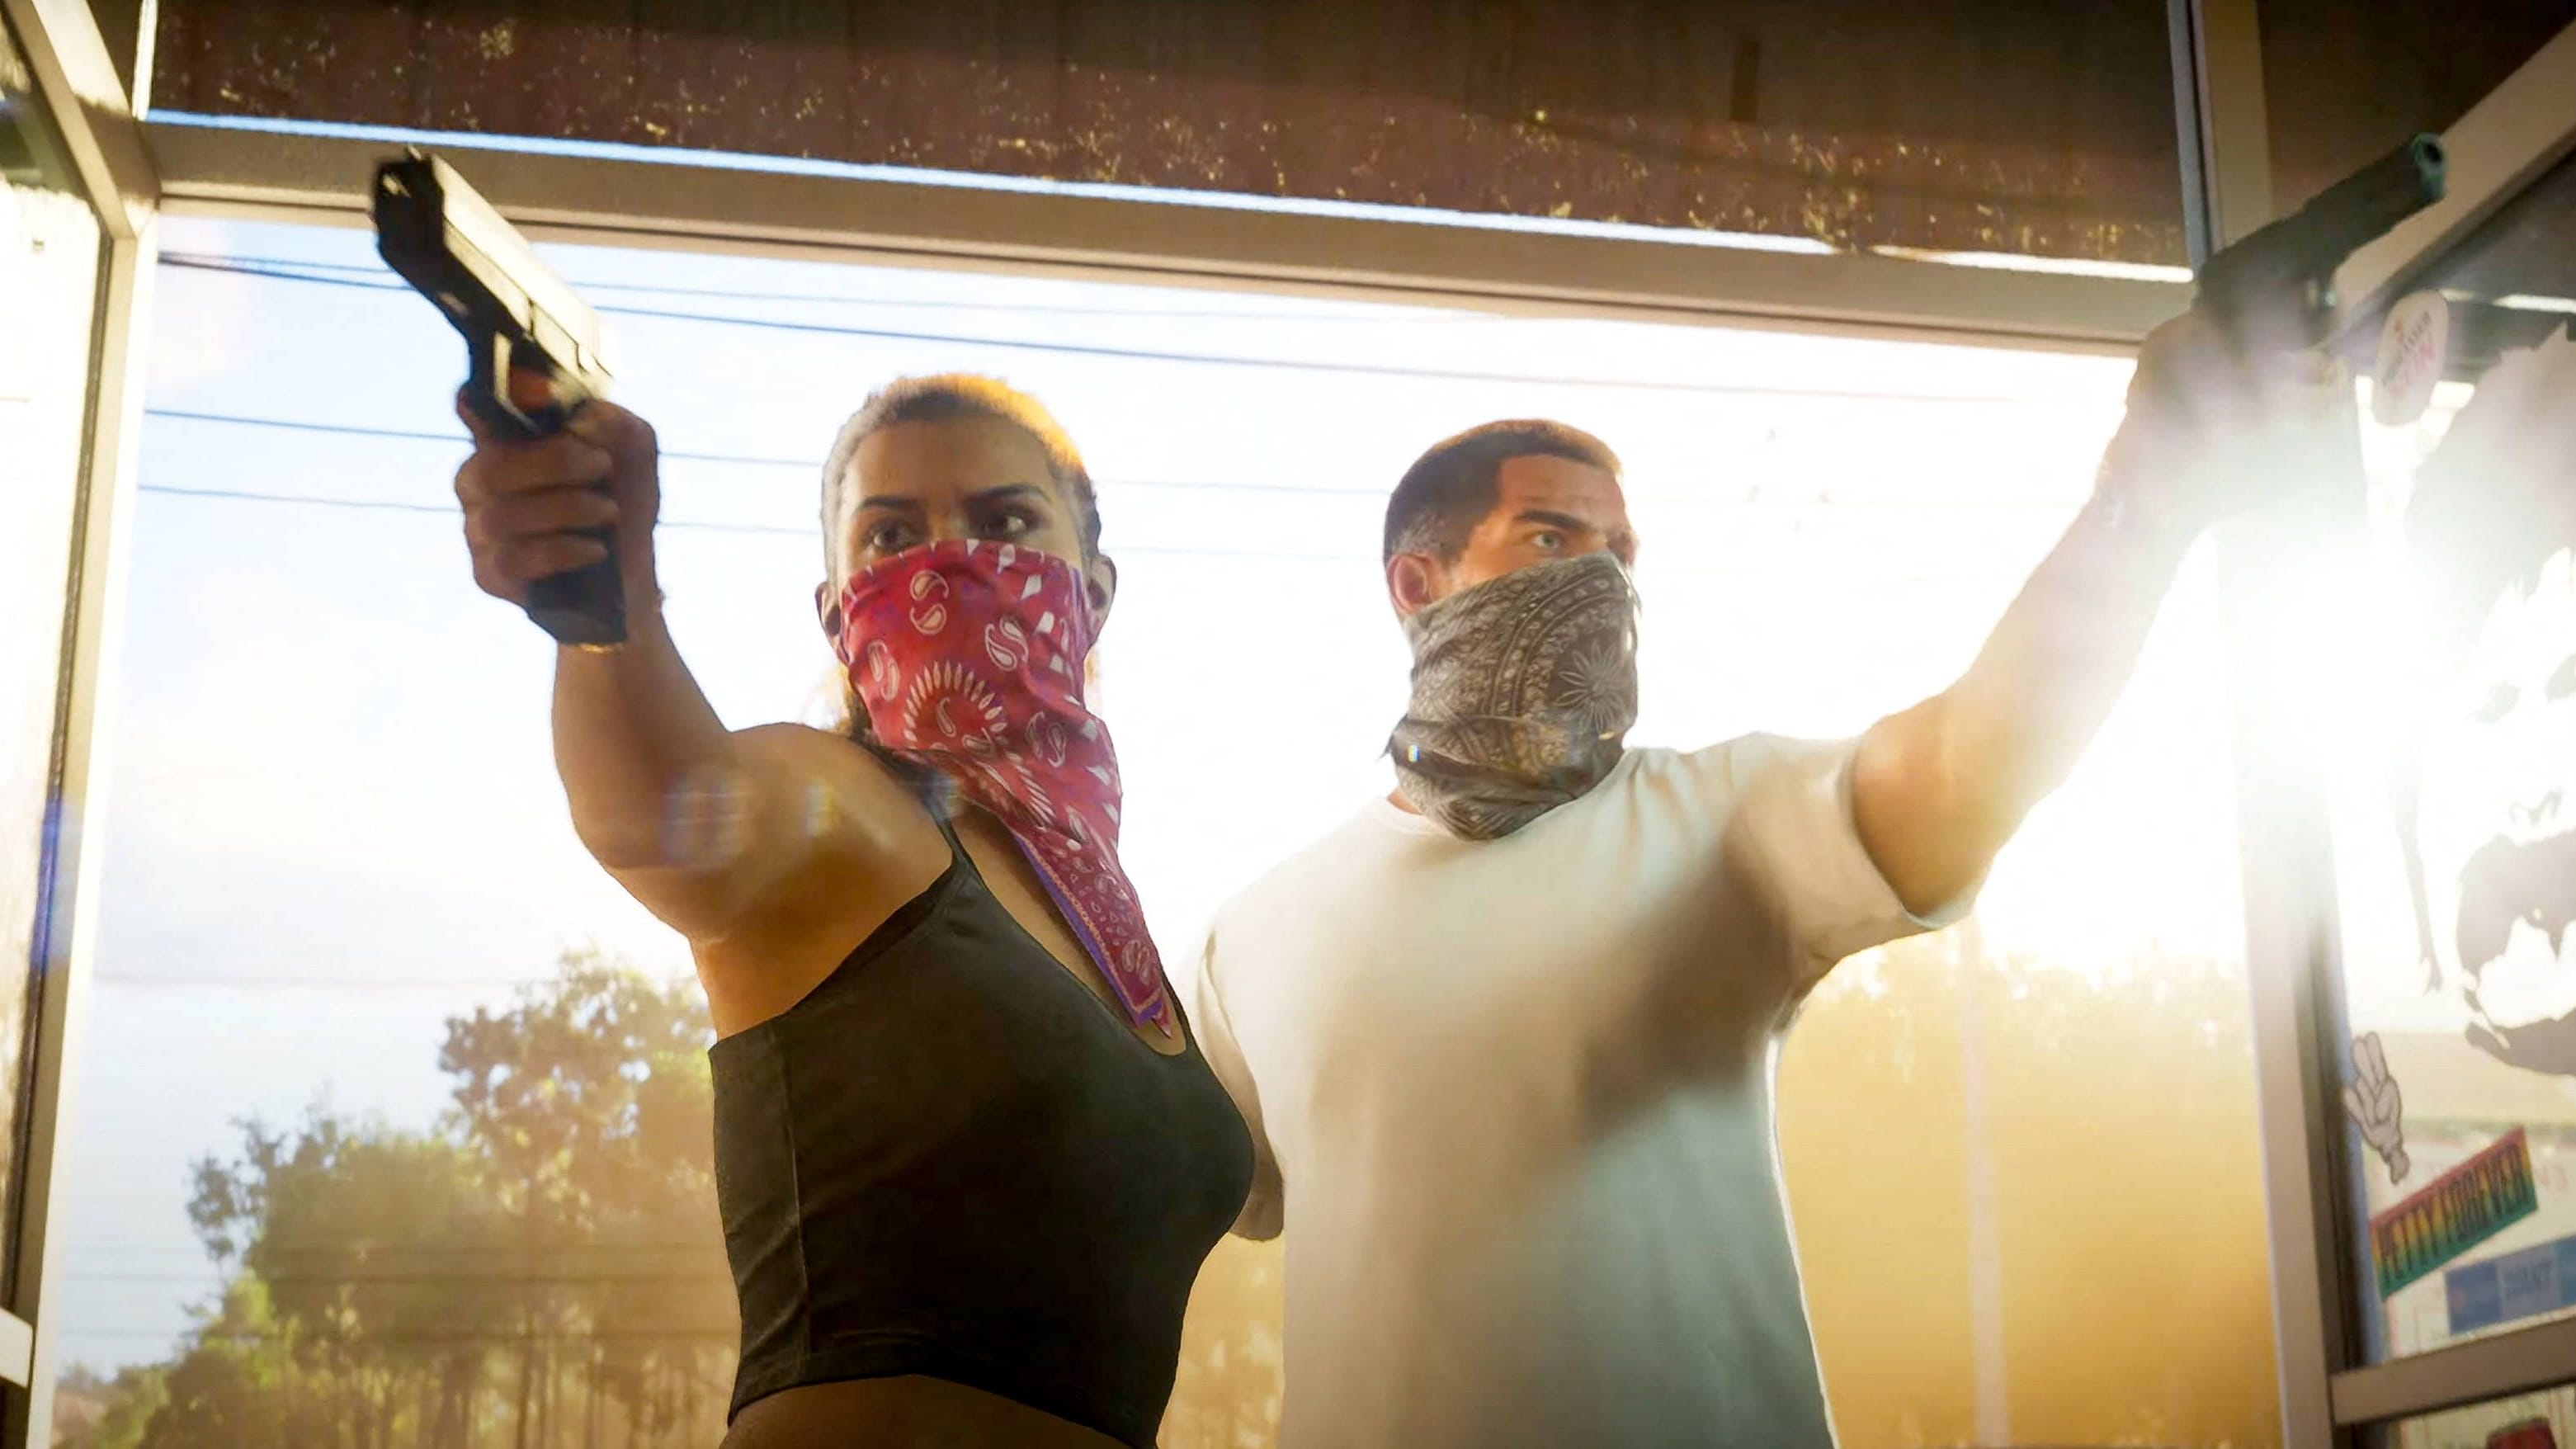 GTA Sylt: KI kreiert kuriosen Game-Trailer mit Christian Lindner und Punks